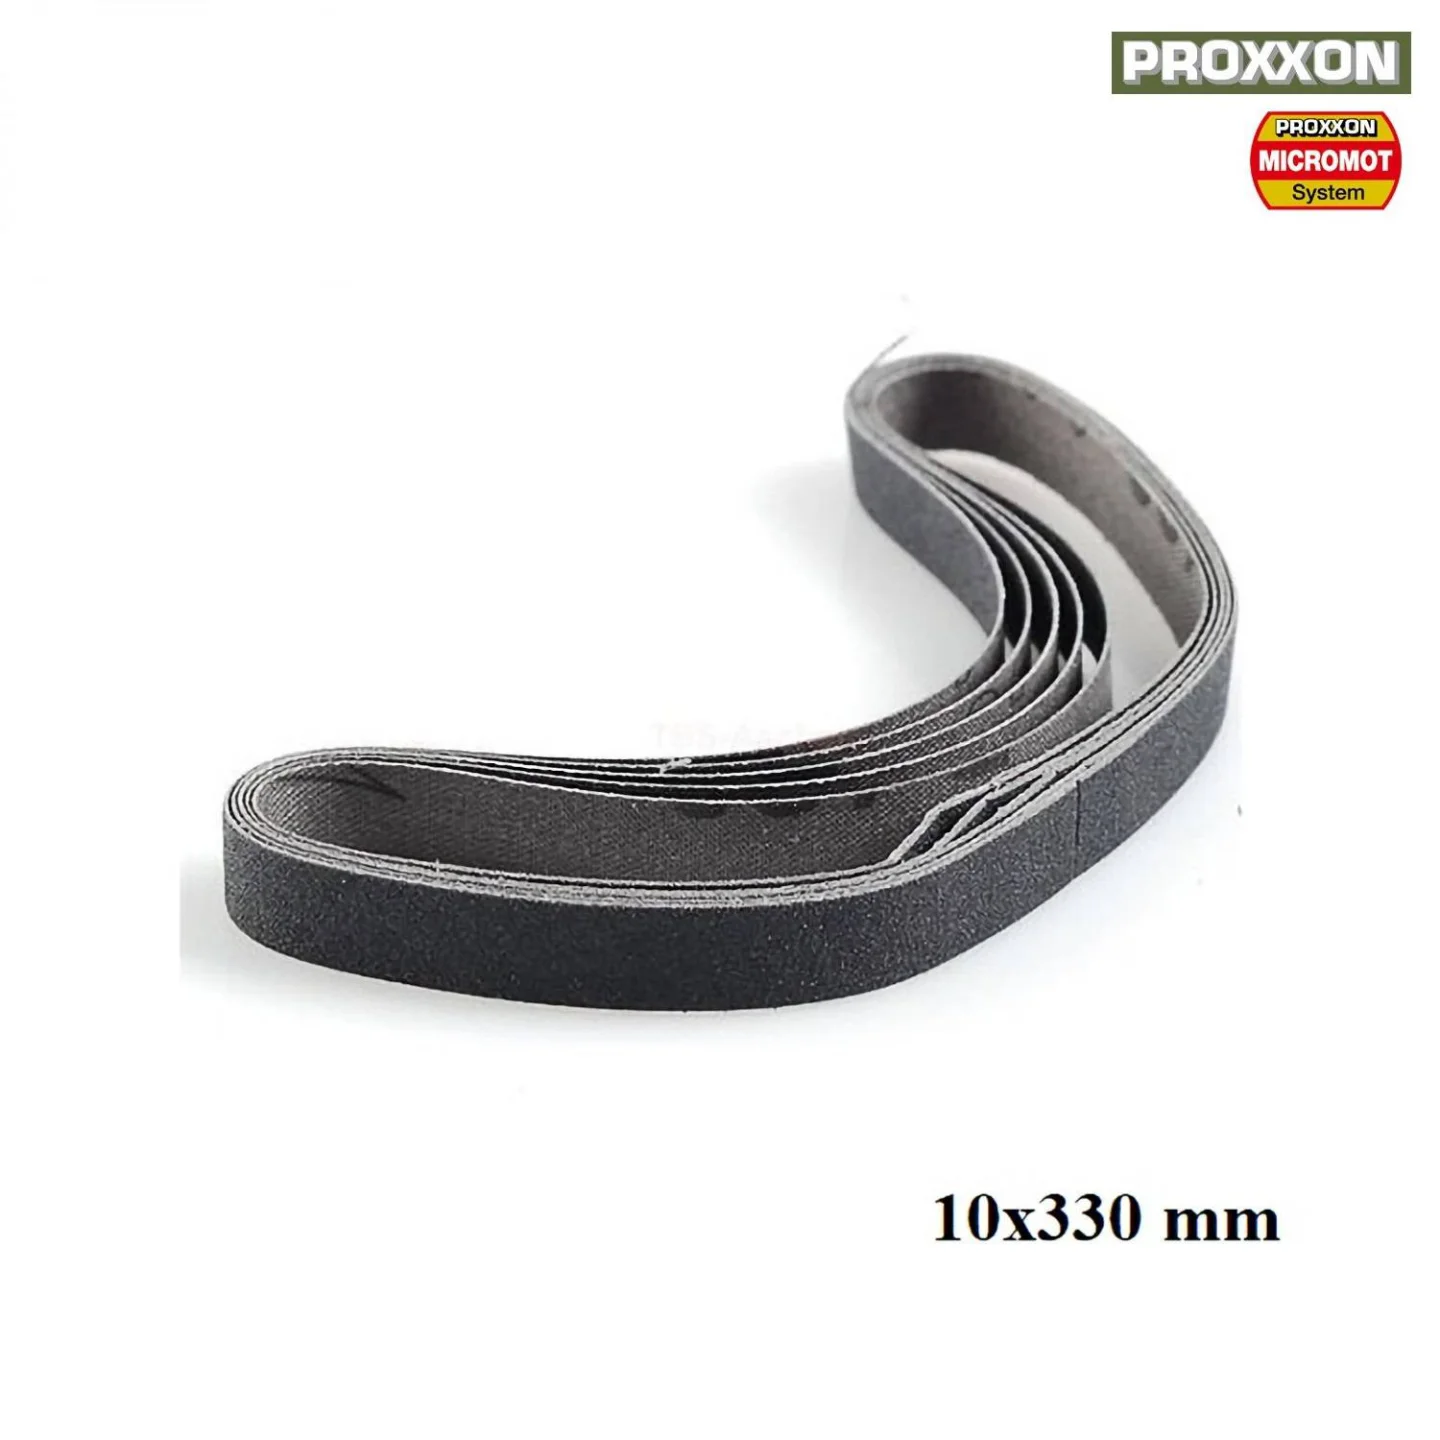 Proxxon-schuurband-28579.